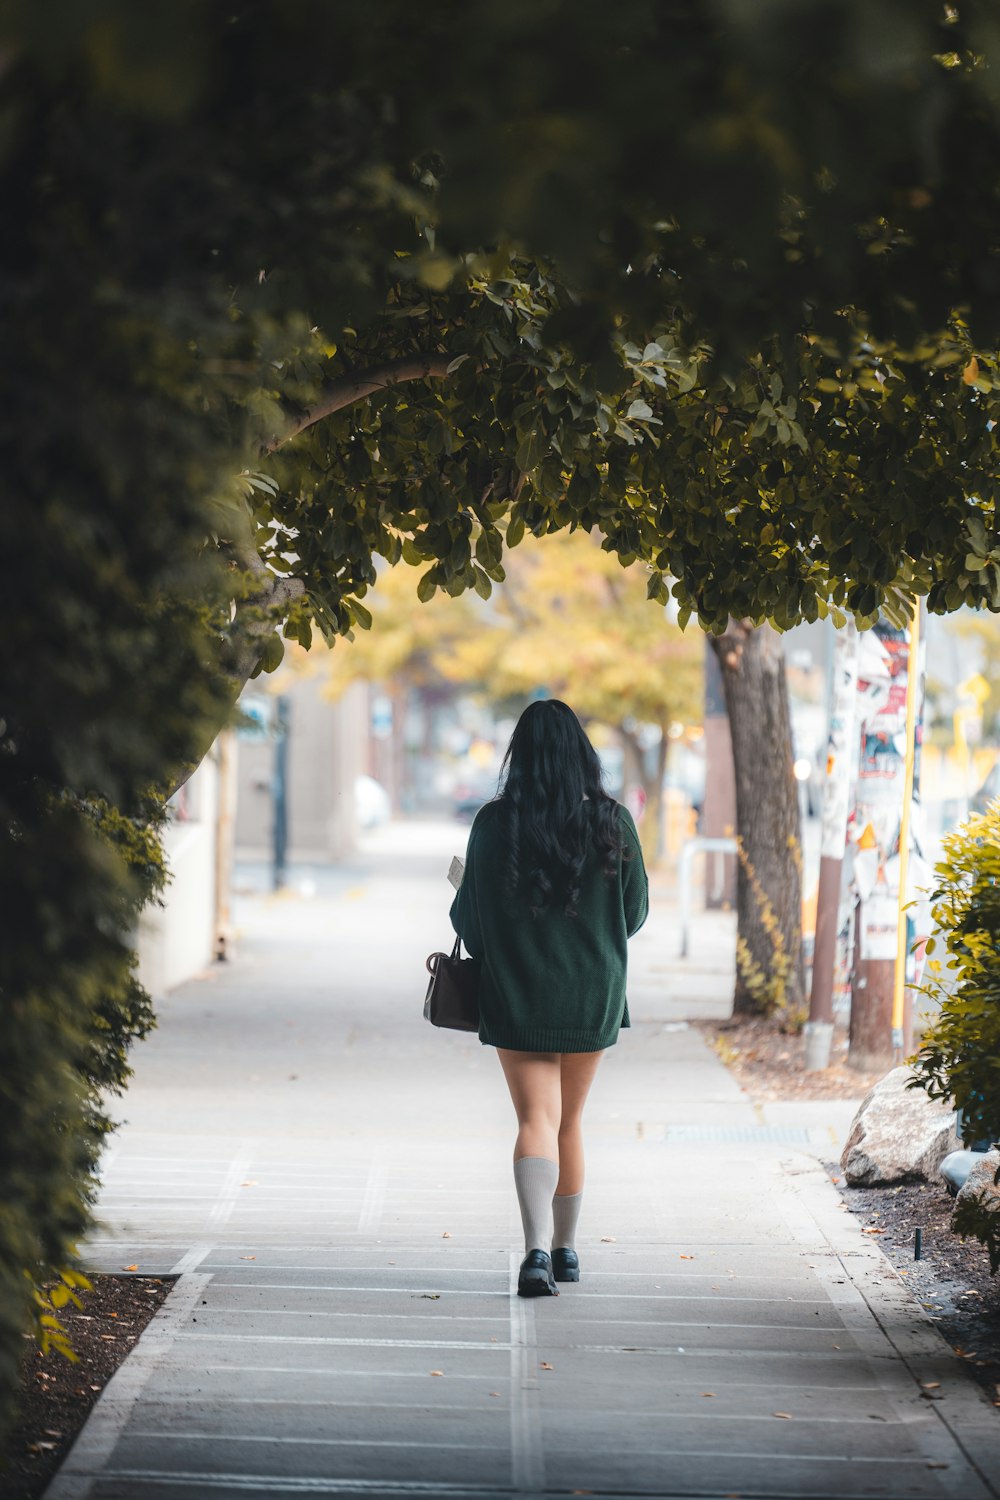 a woman walking down a sidewalk under a tree